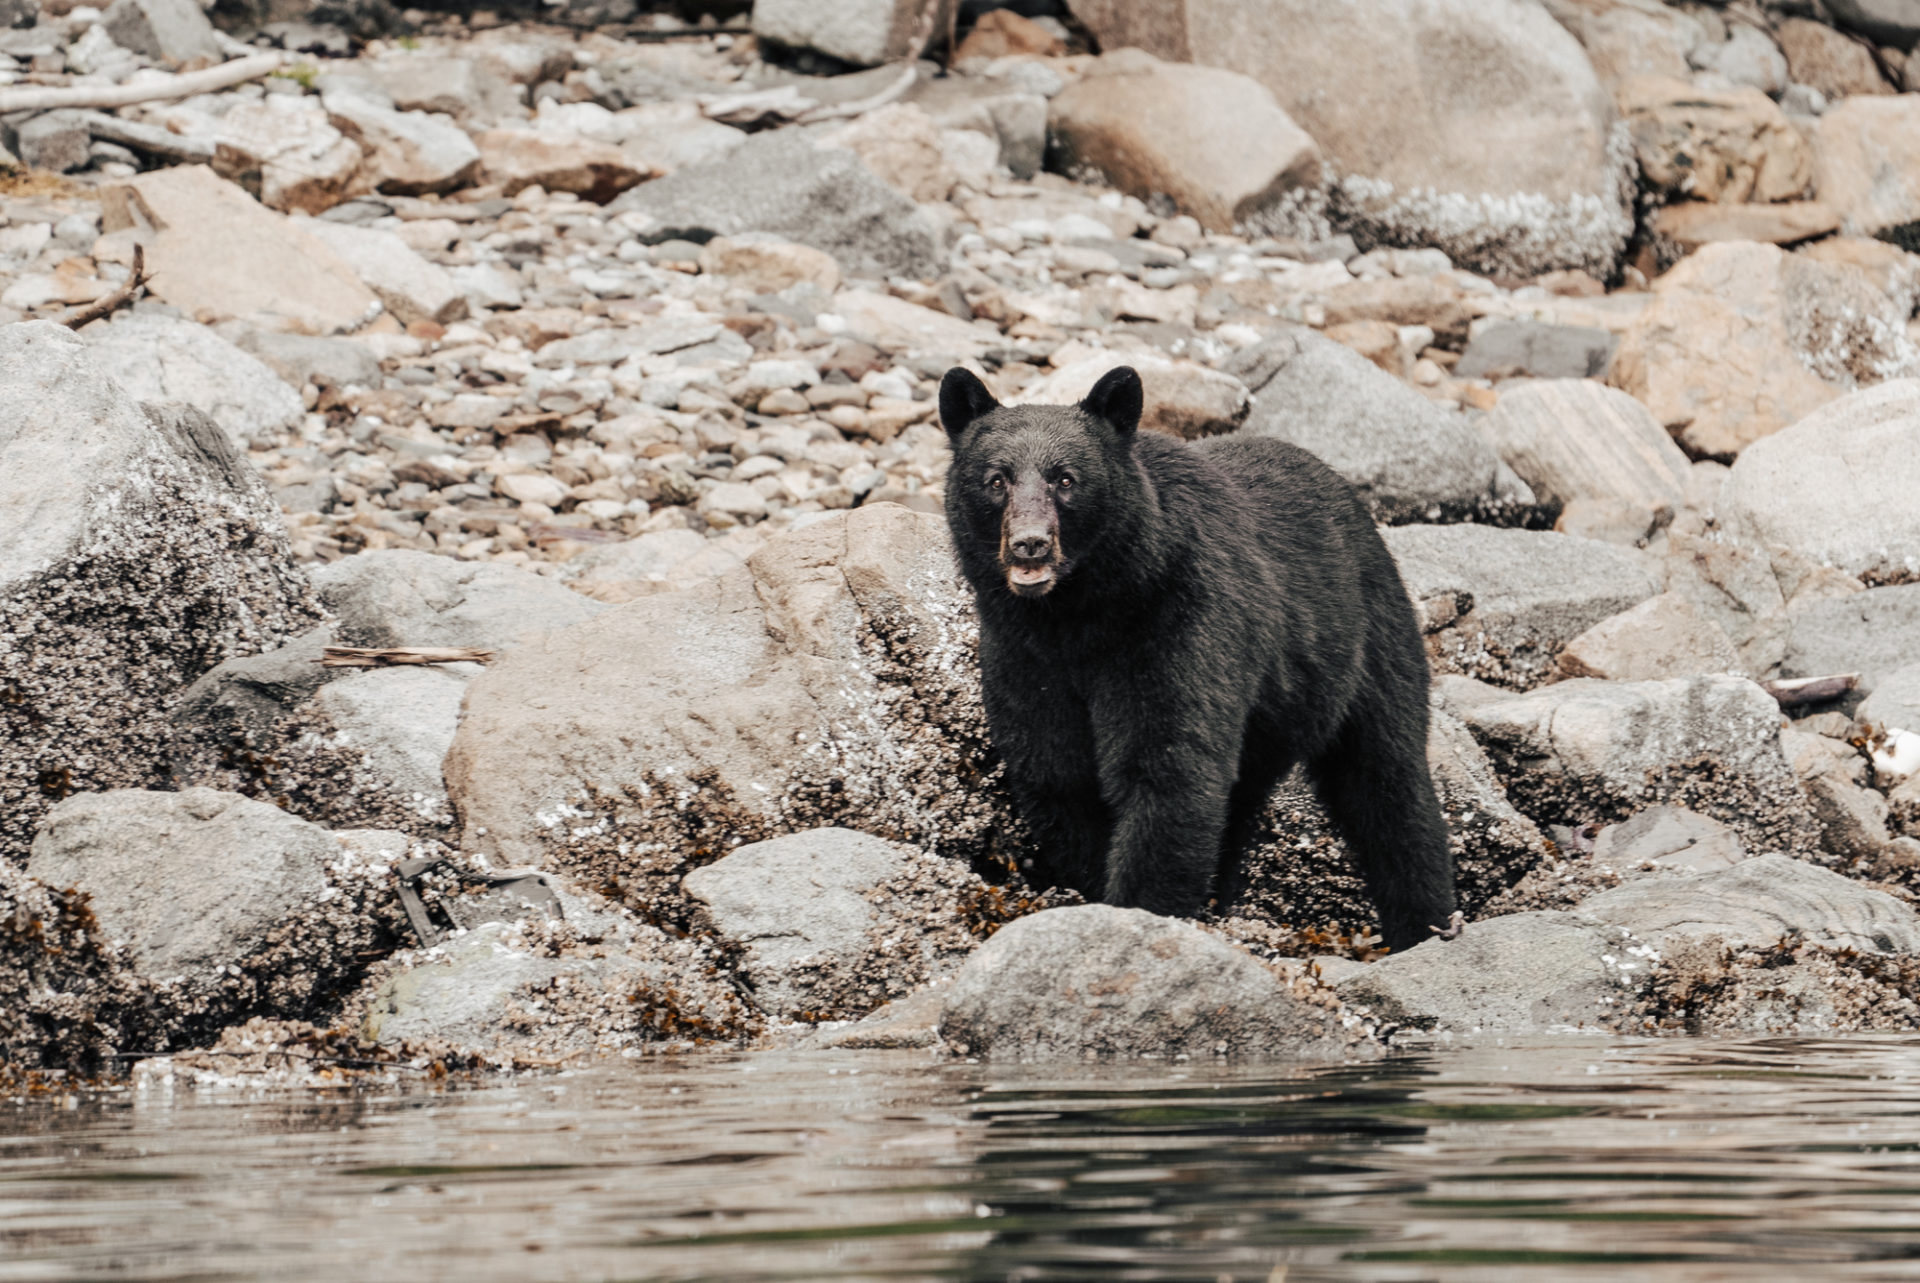 Canada BC Vancouver Island Campbell River homalco tour bear 01999